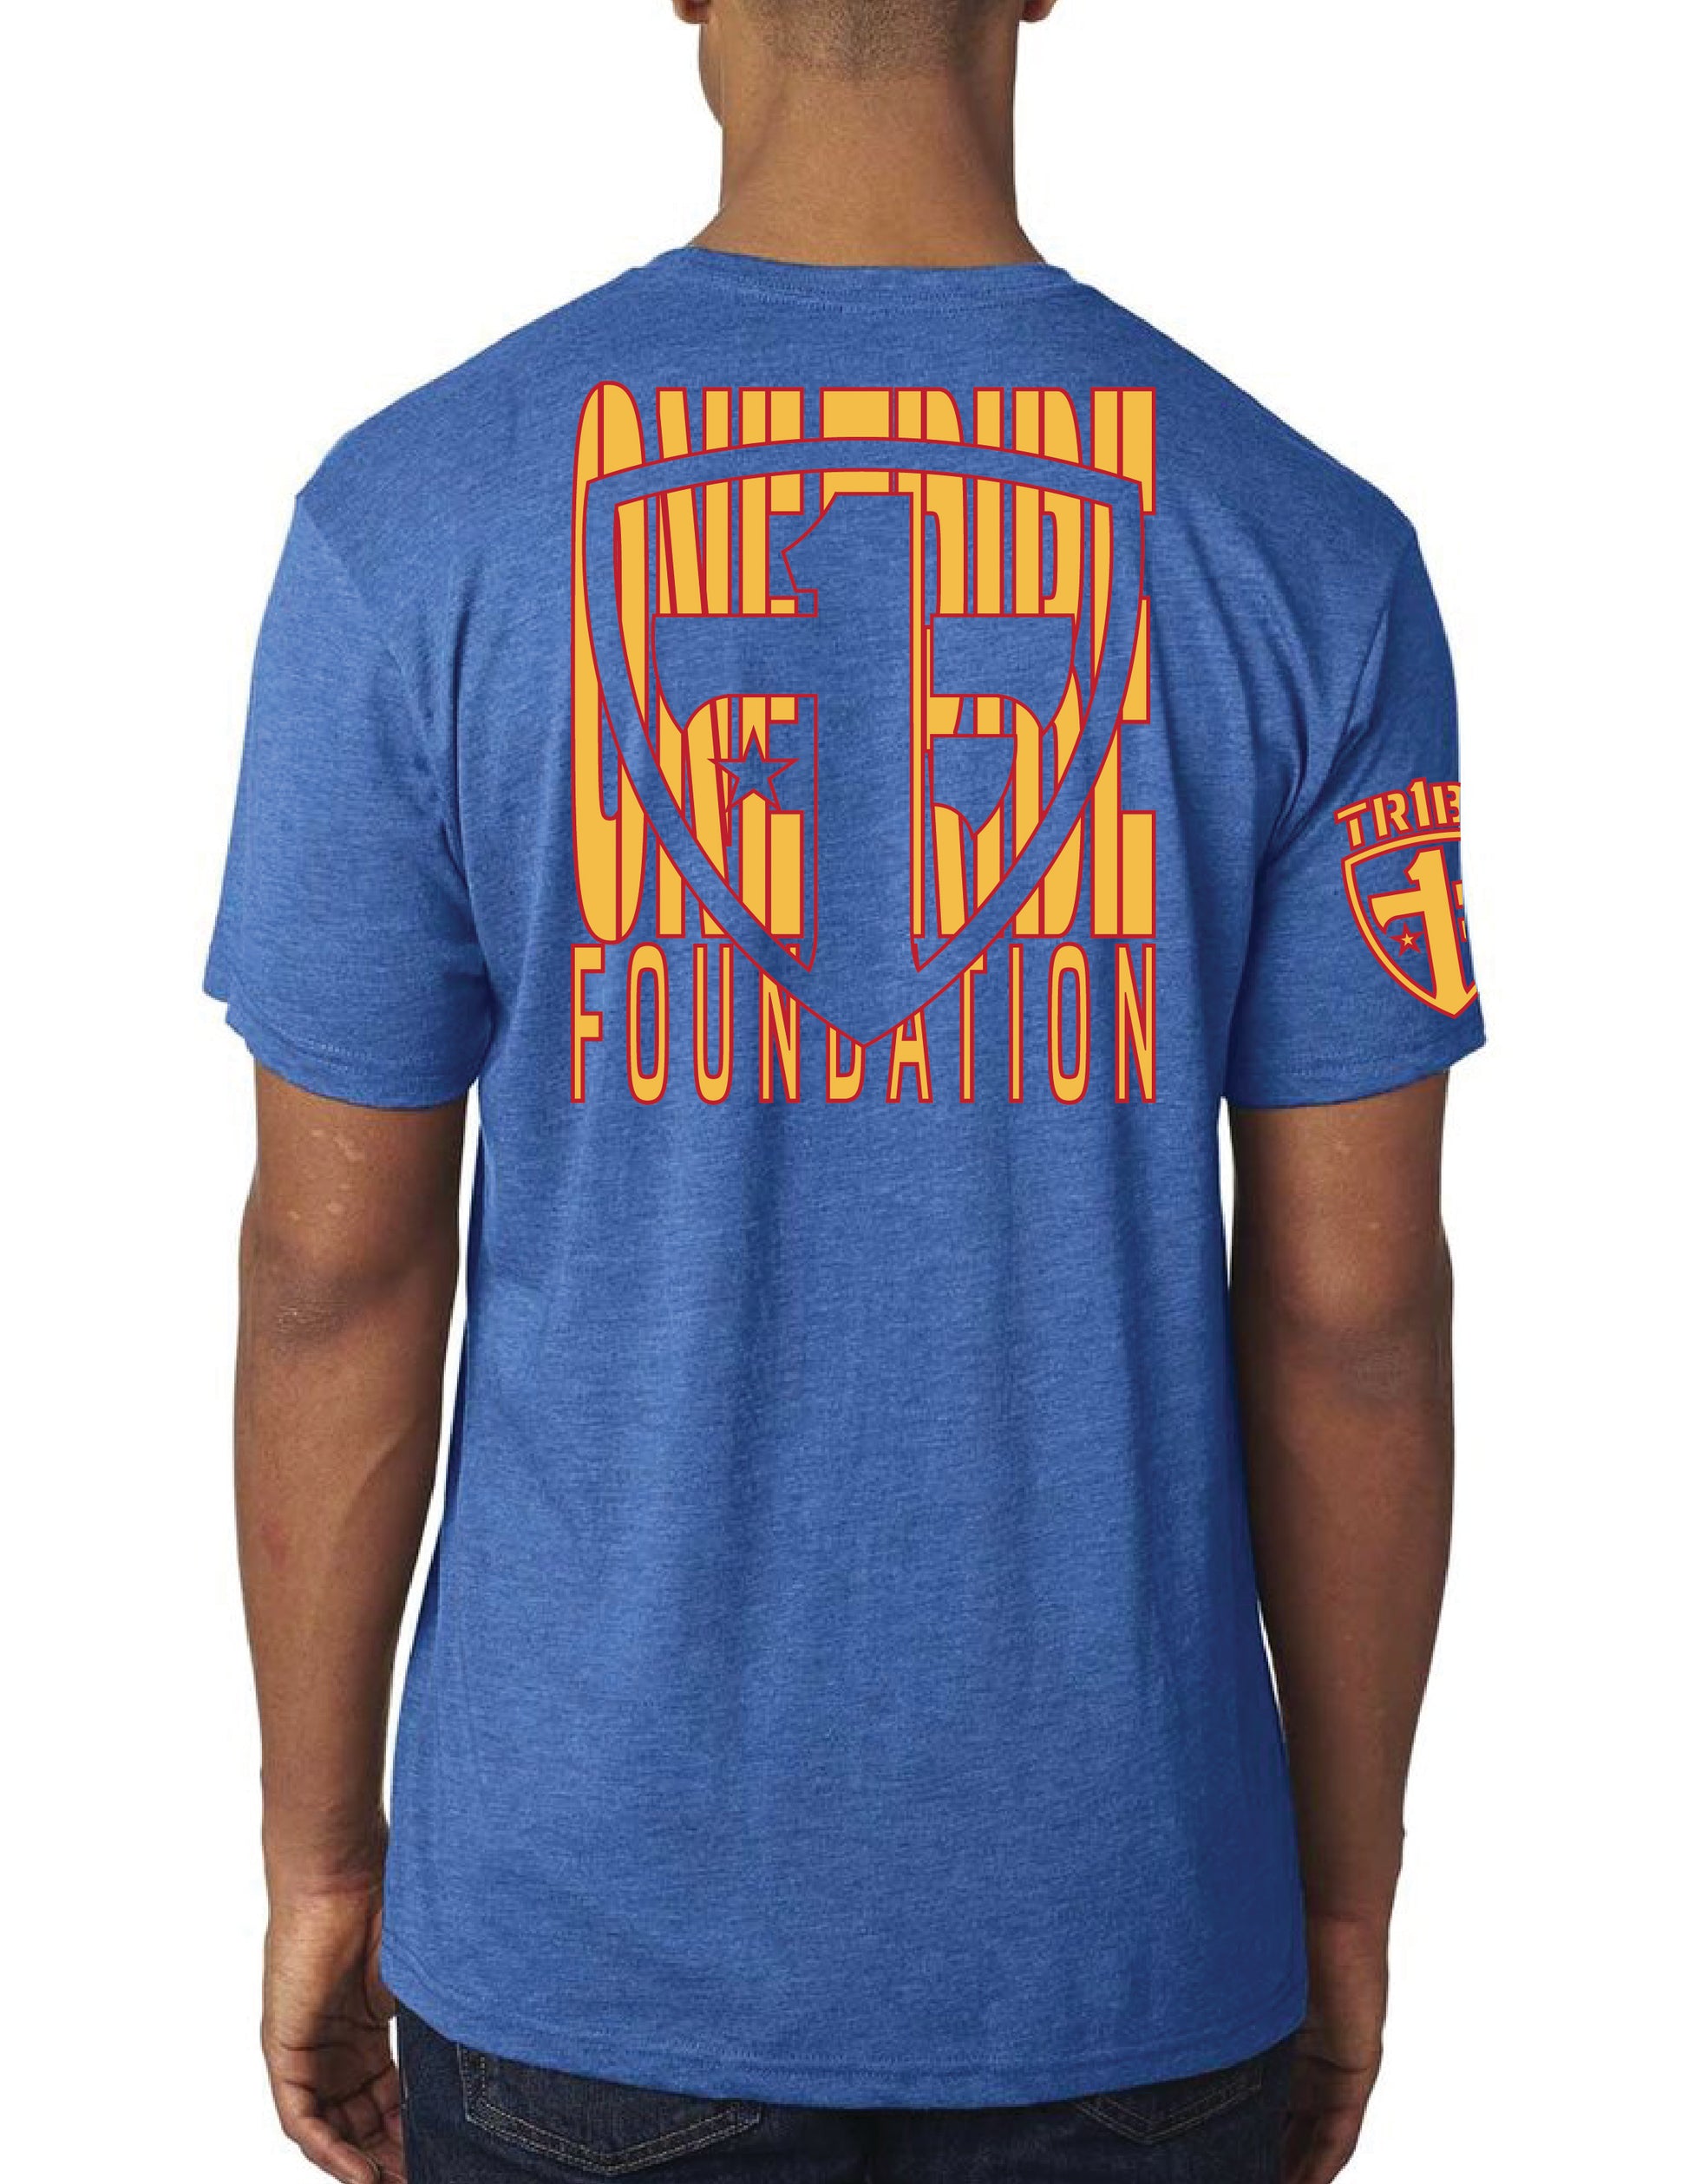 One Tribe Foundation royal blue 22KILL t-shirt.